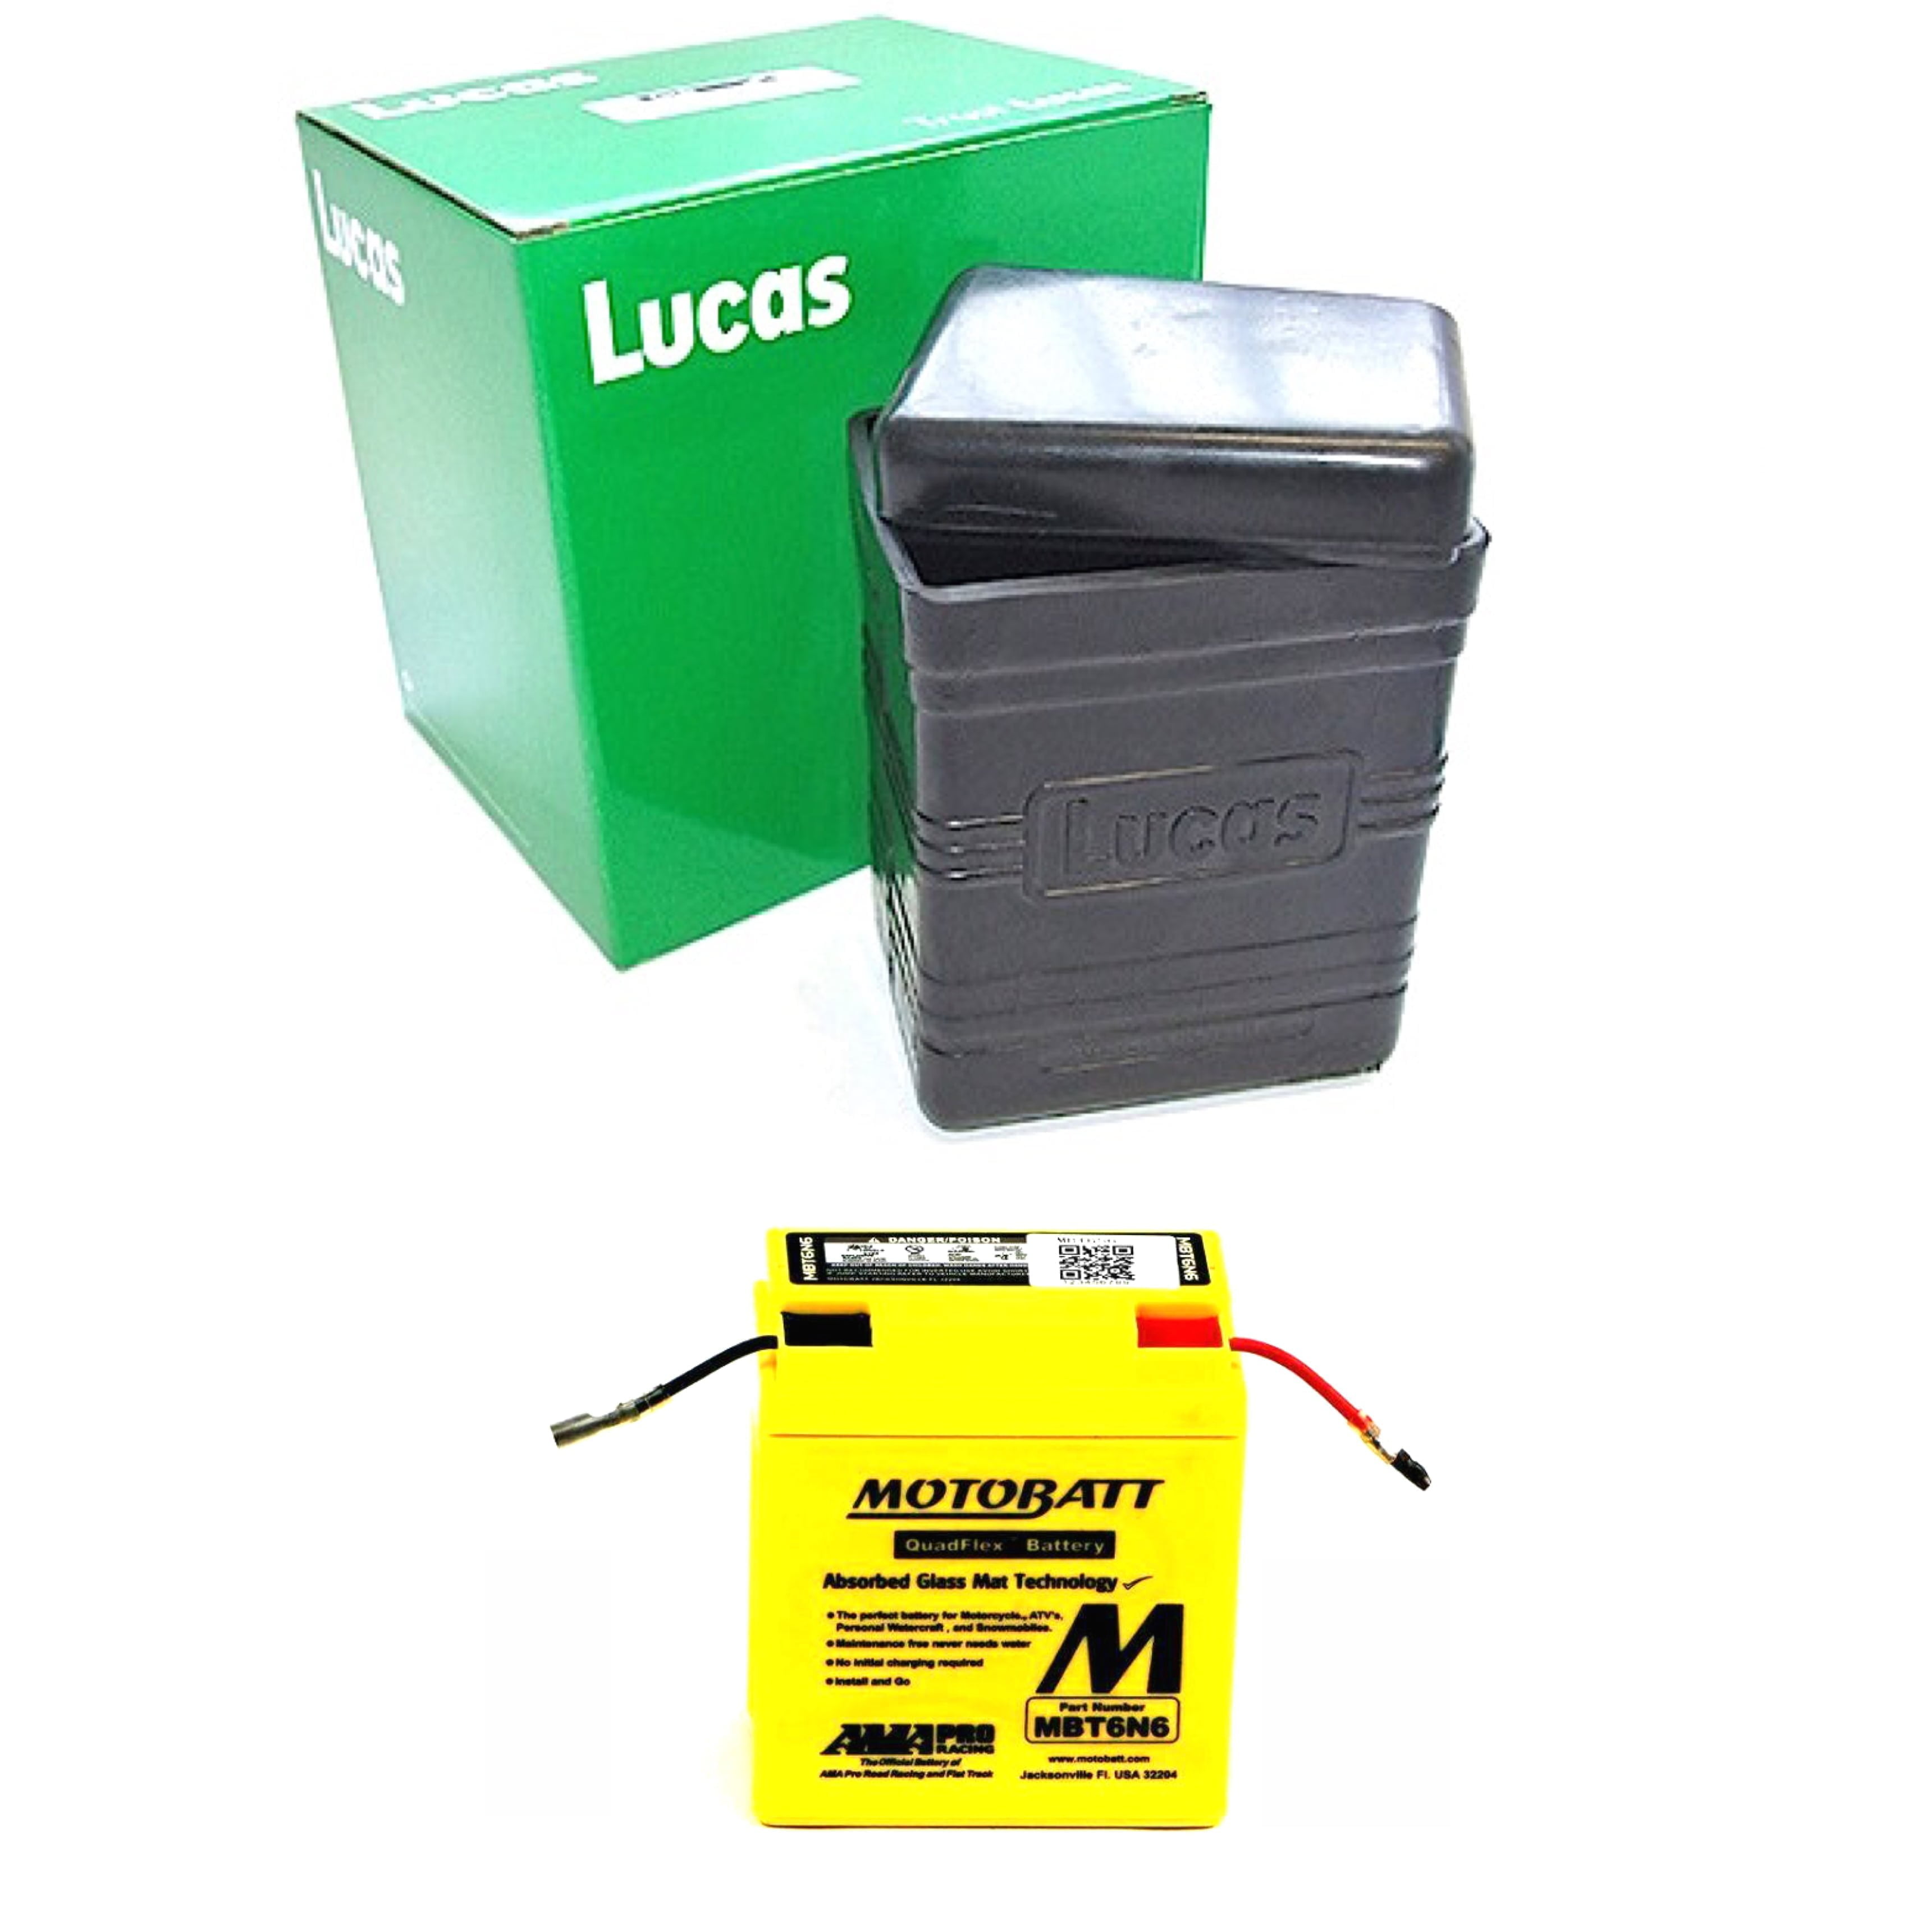 Lucas B38-6 Battery box with 6V 4AH AGM Battery 